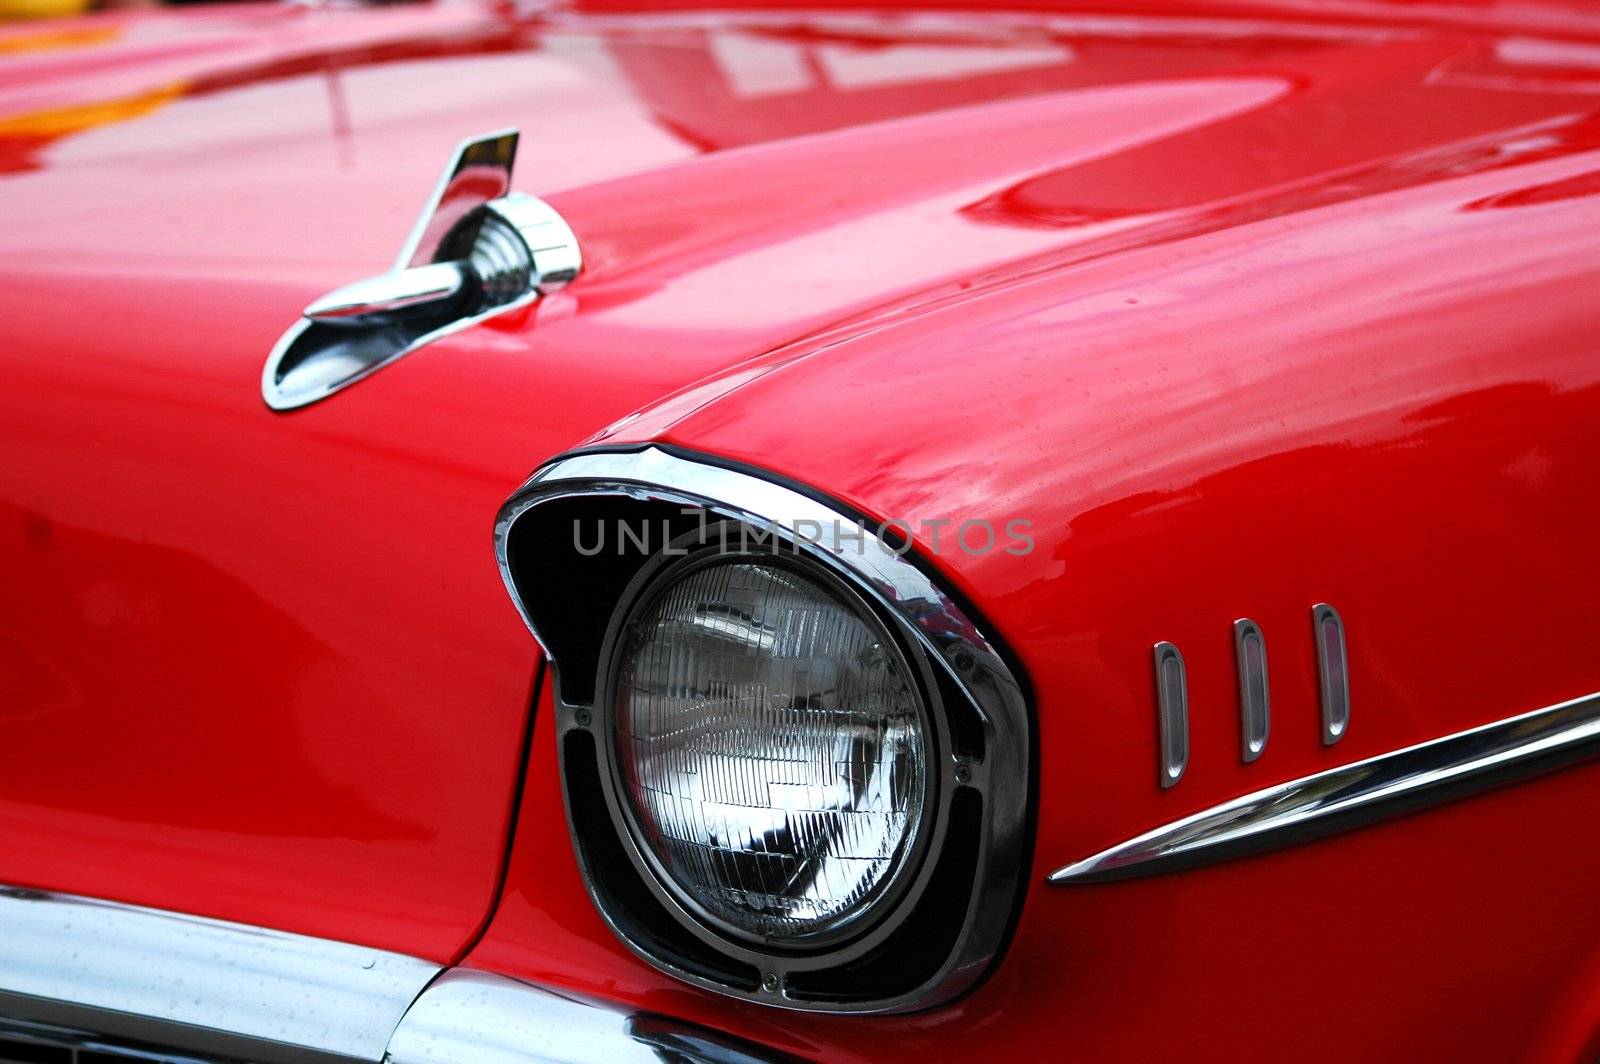 front of red historic jaguar car, horizontally framed shot red historical jaguar car in Cardiff bay